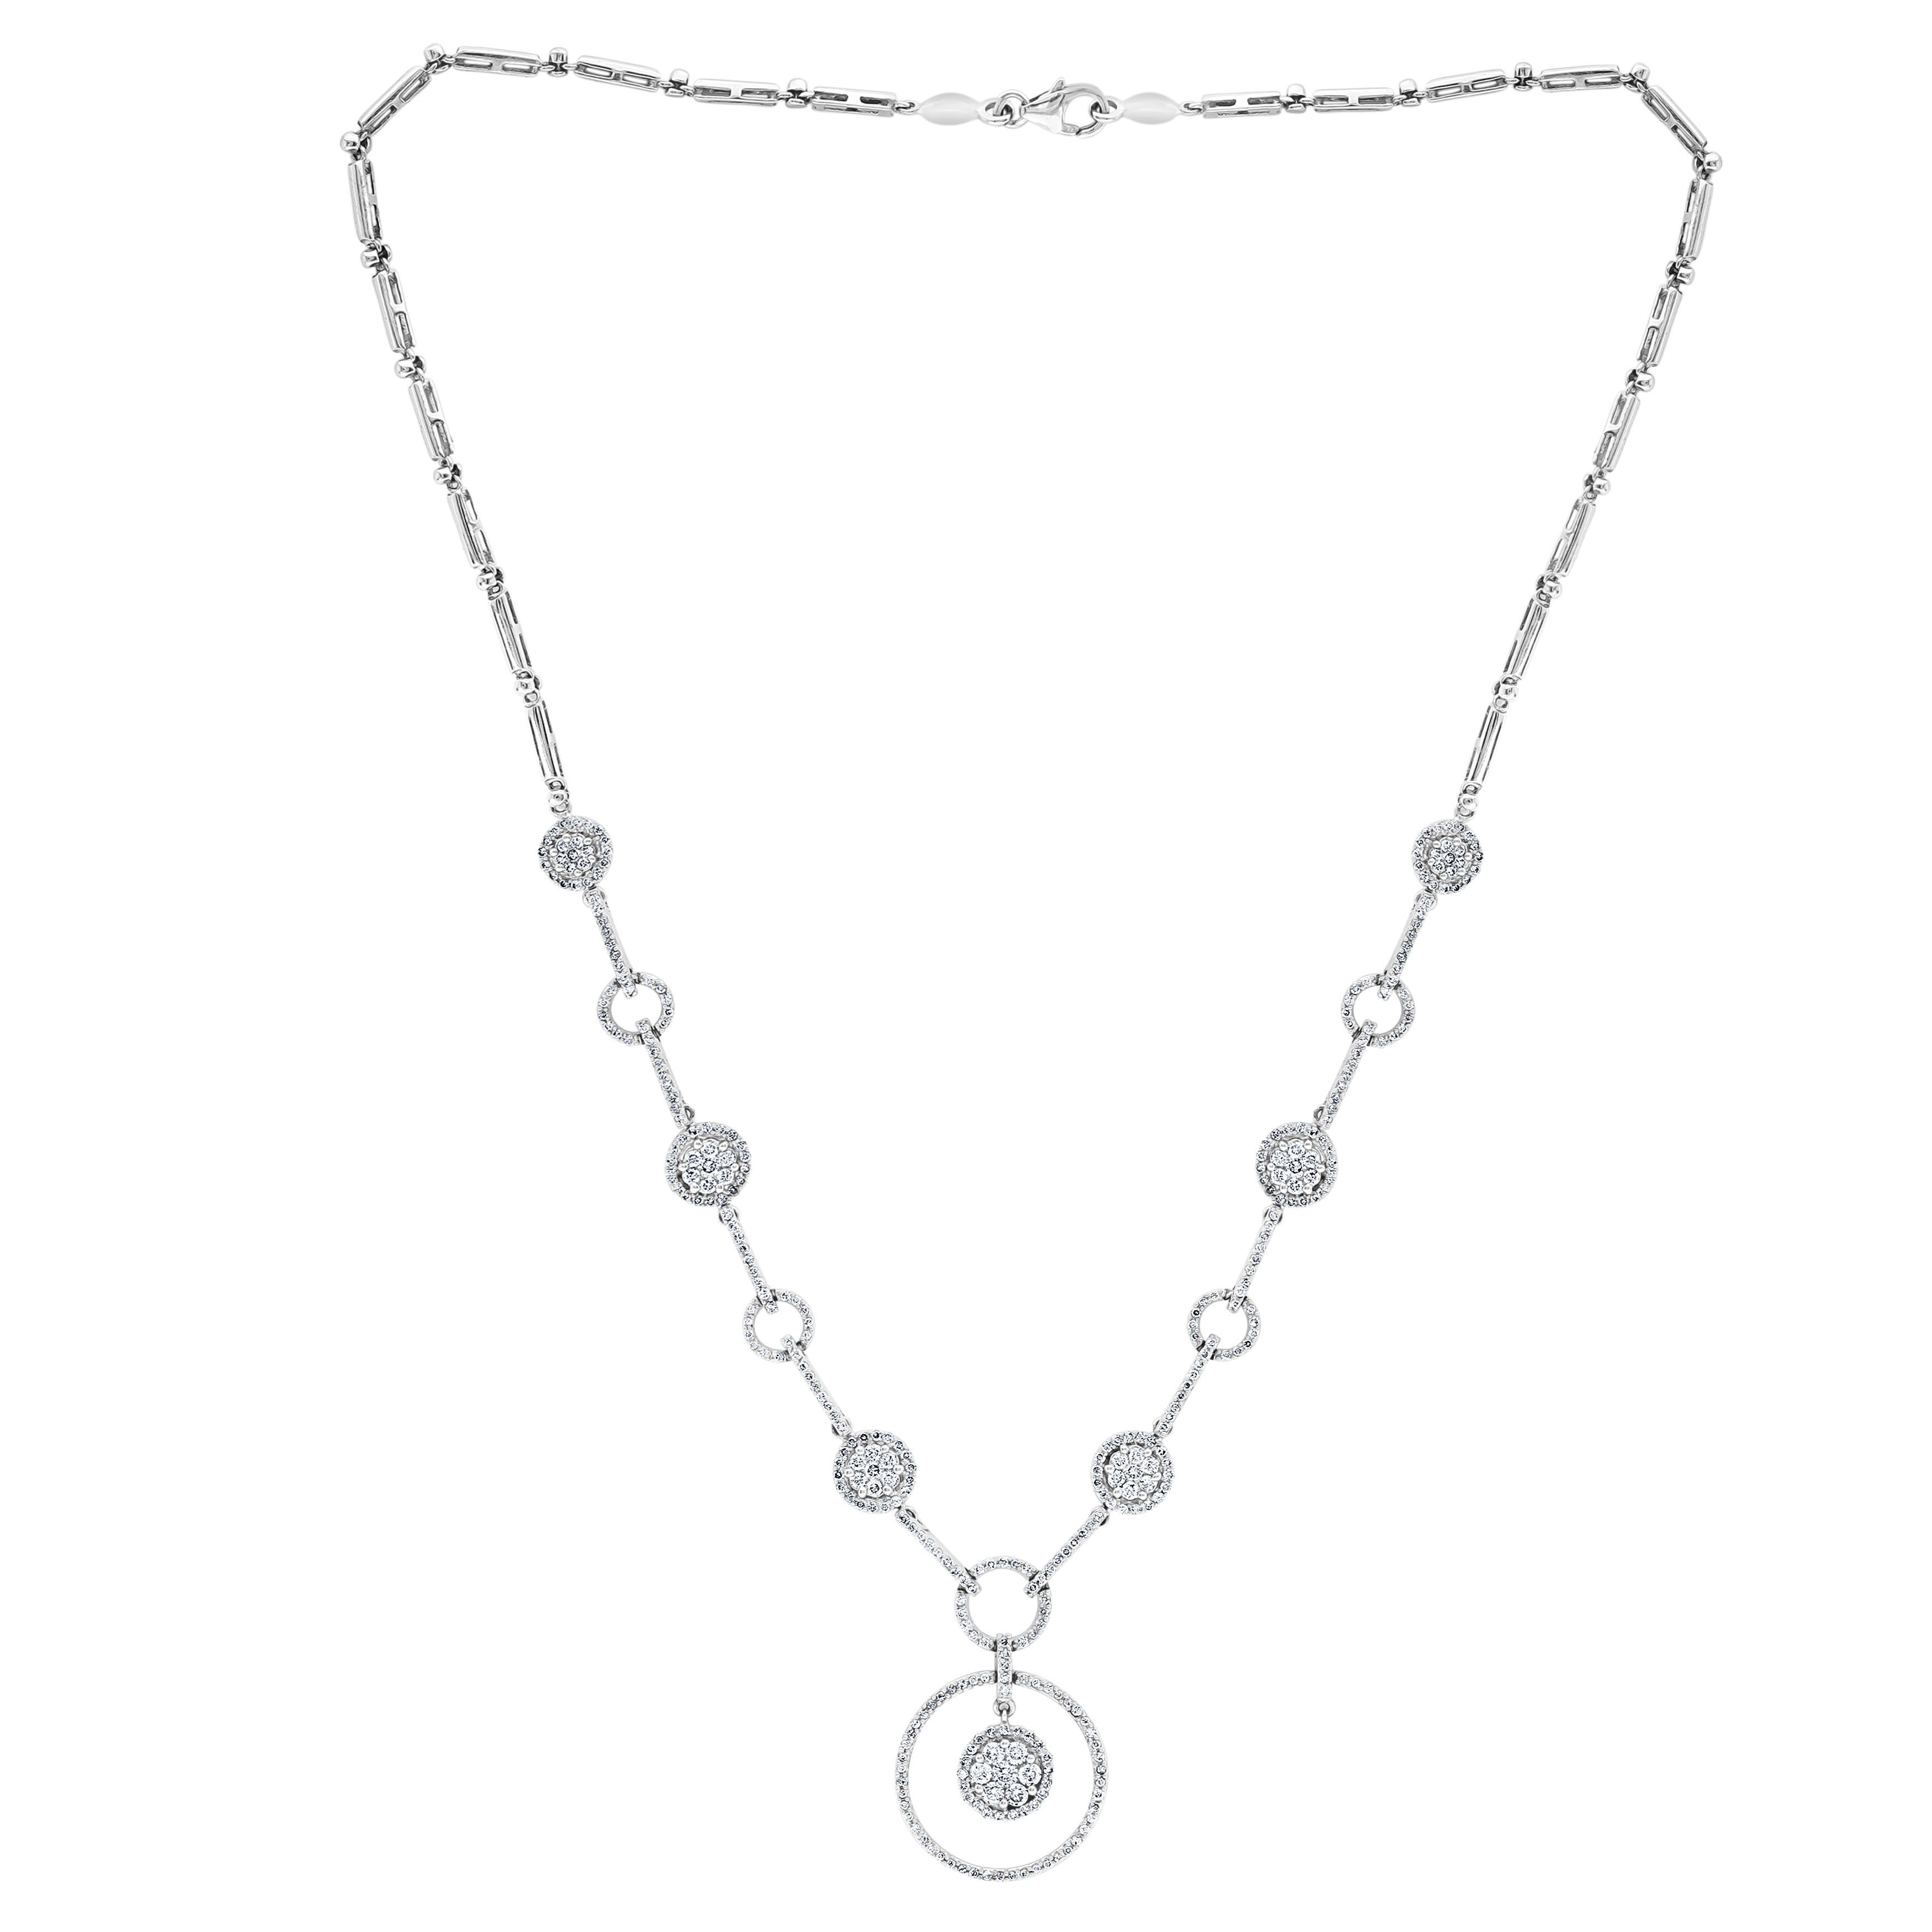 Designer Effy's Elegant Dangling 3.63 Carat Diamond Necklace in 14 Karat Gold 7